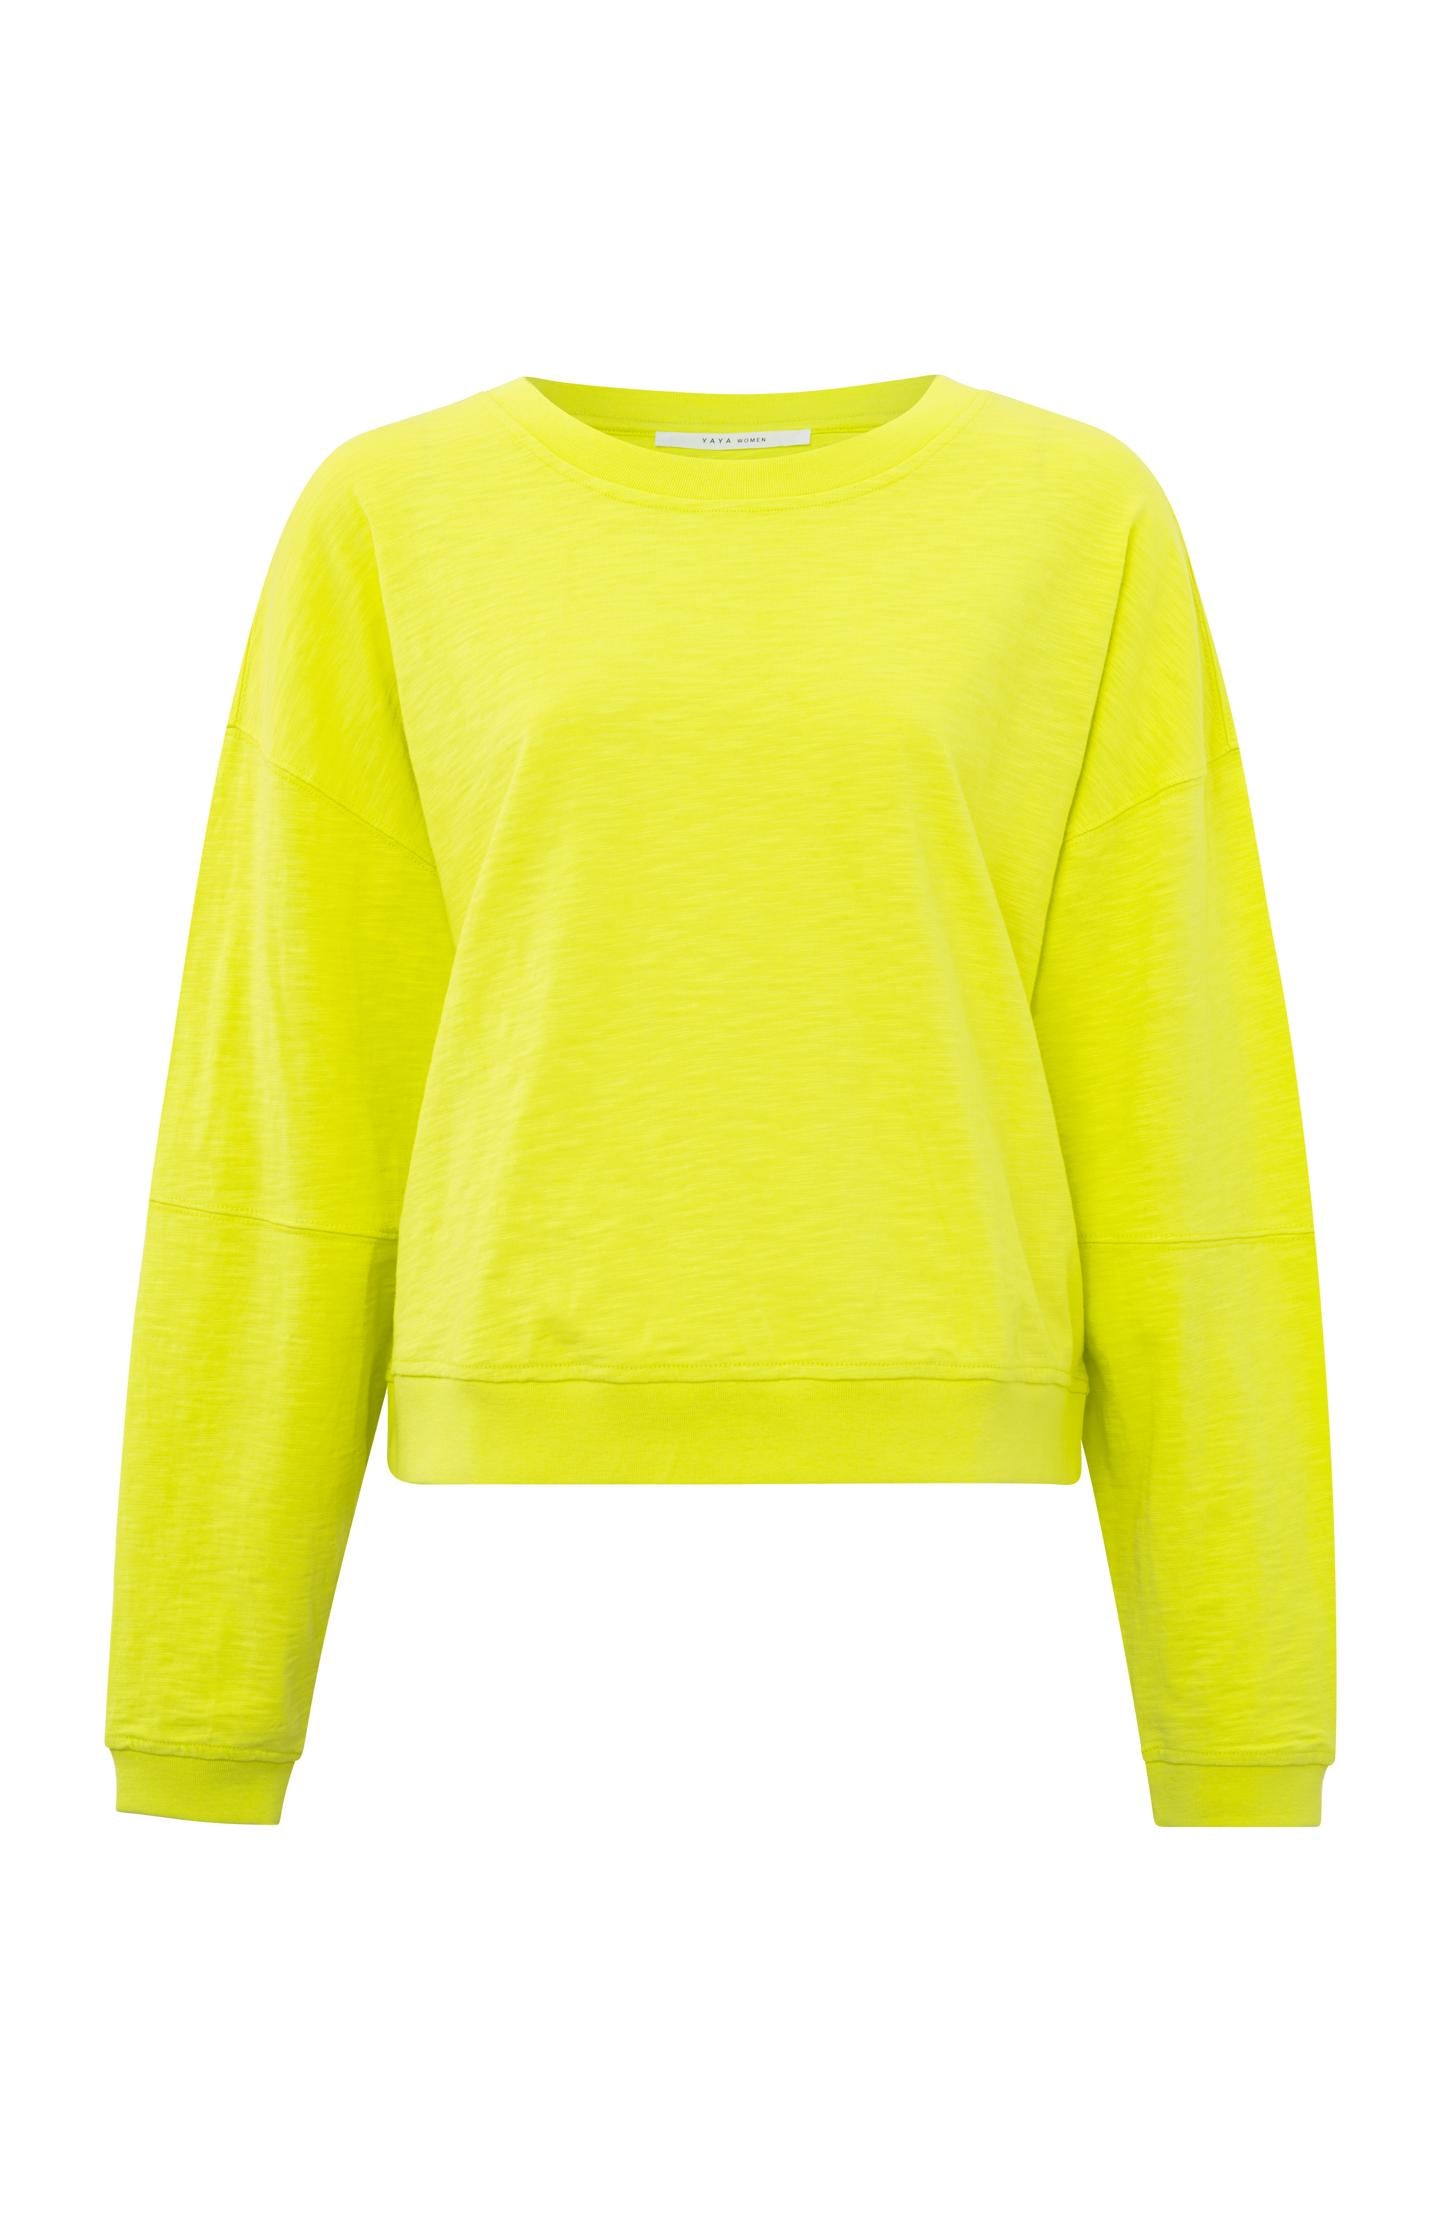 Round neck sweatshirt with long sleeves and slub effect - Type: product